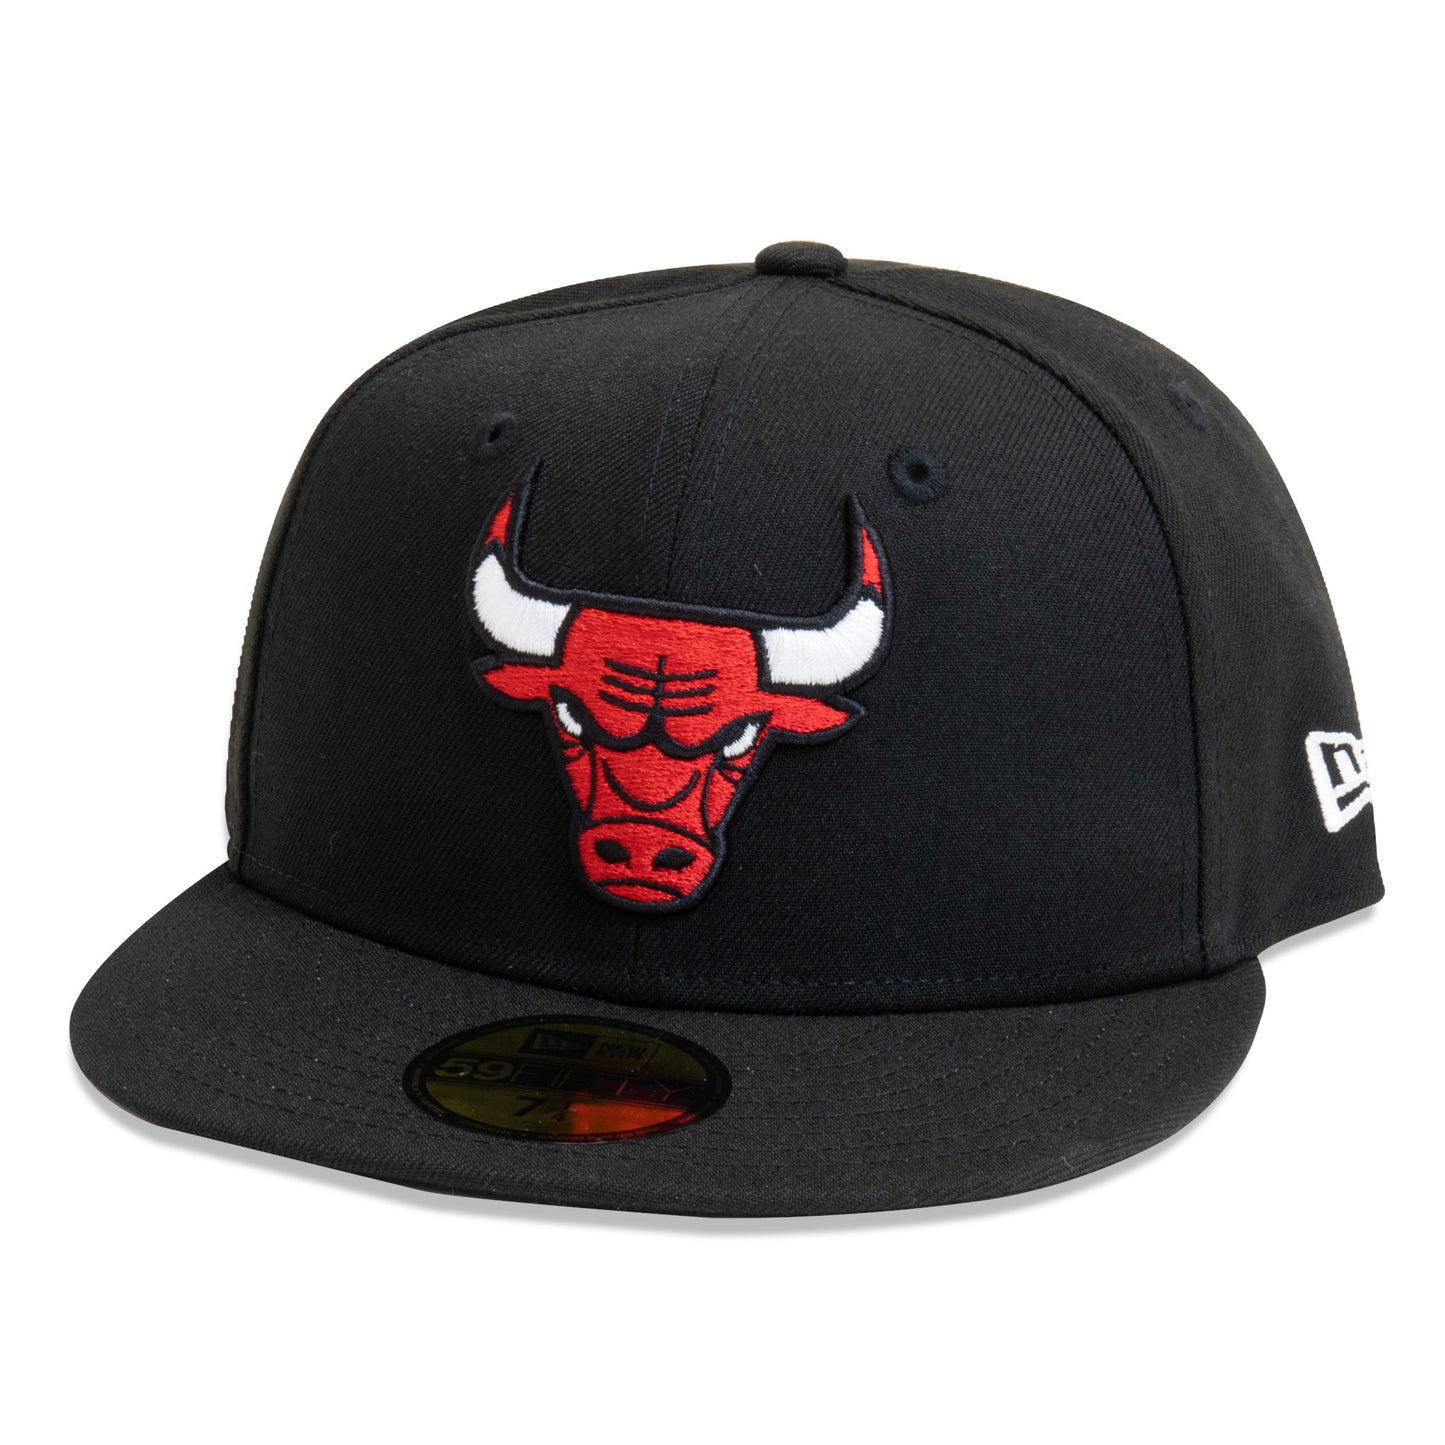 New Era - 59Fifty Fitted Essential Chicago Bulls - Black/OTC - Headz Up 